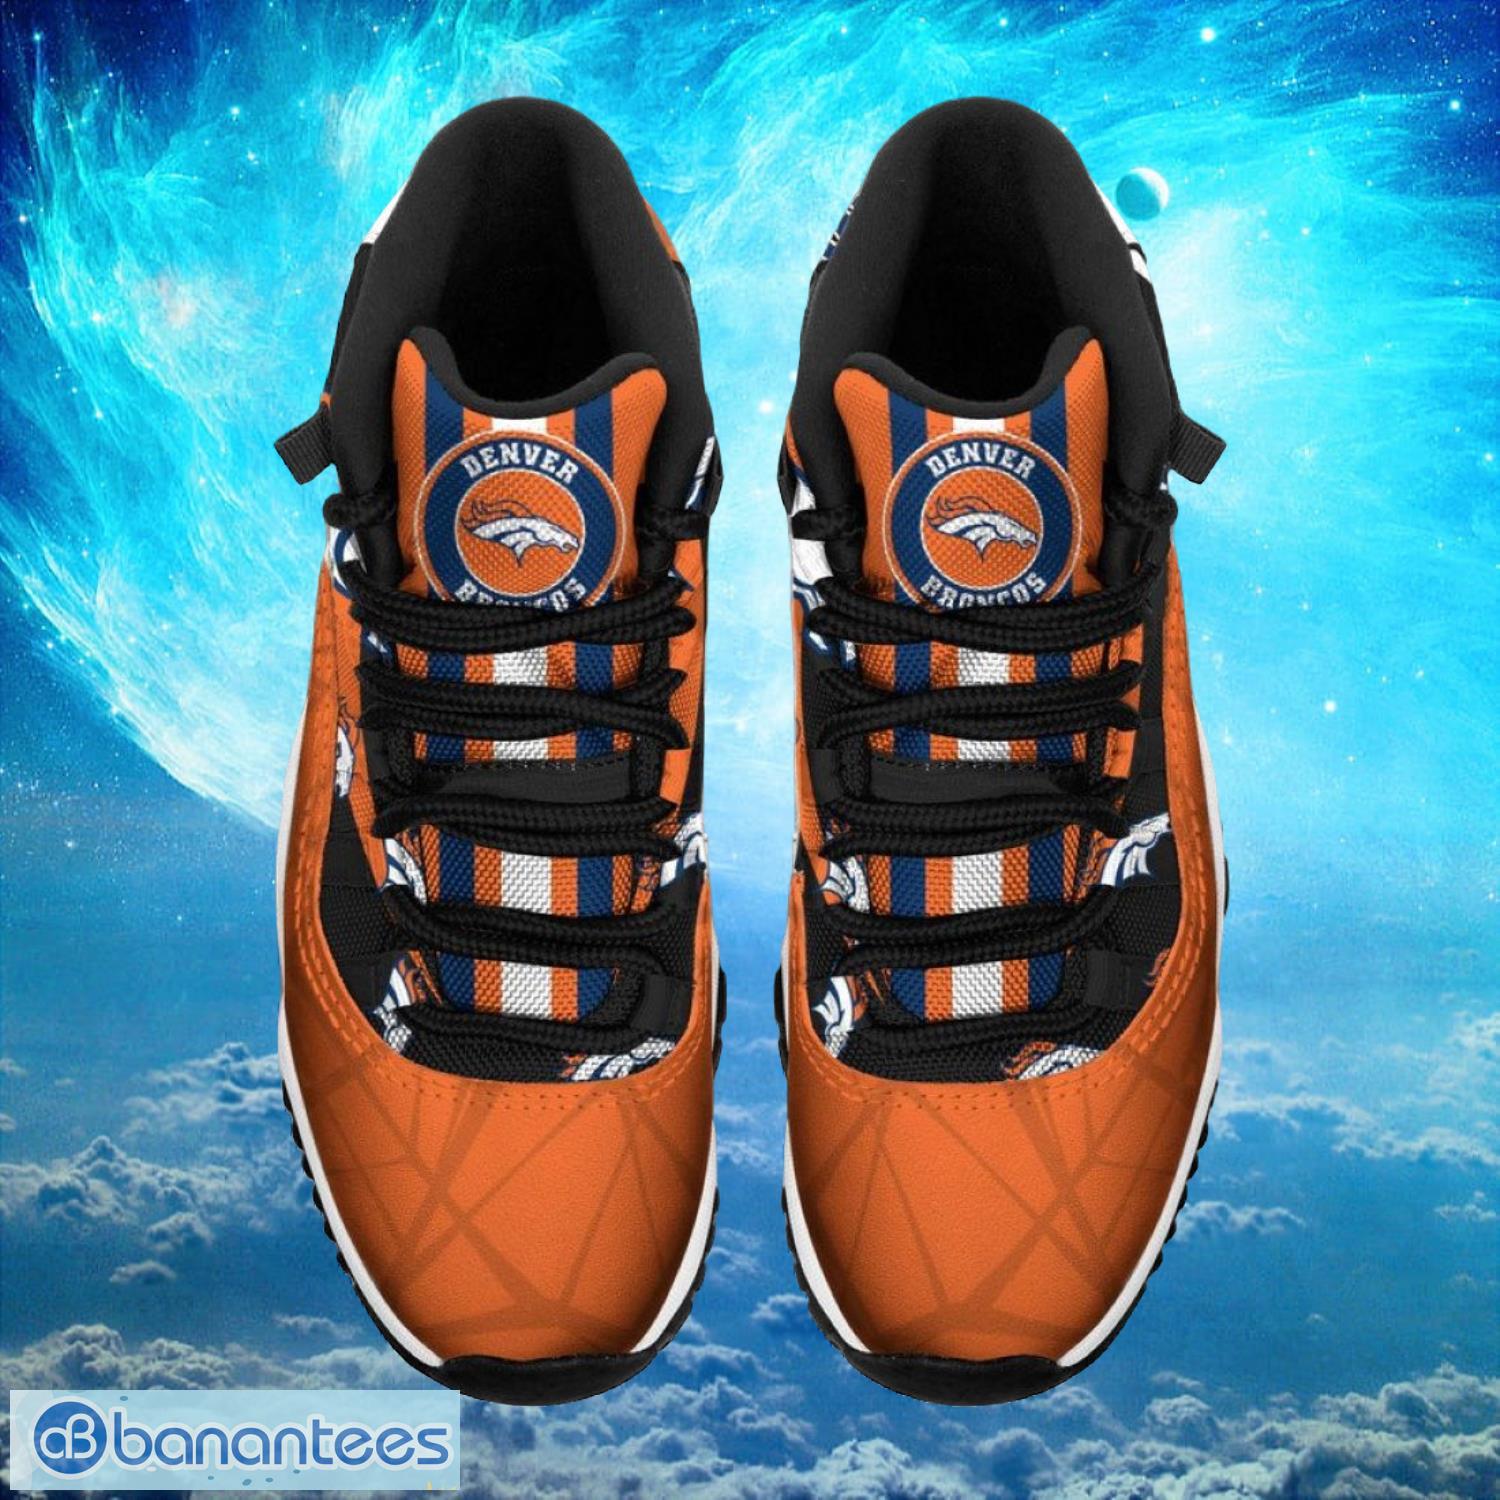 Denver Broncos NFL Air Jordan 11 Sneakers Shoes Gift For Fans Product Photo 2